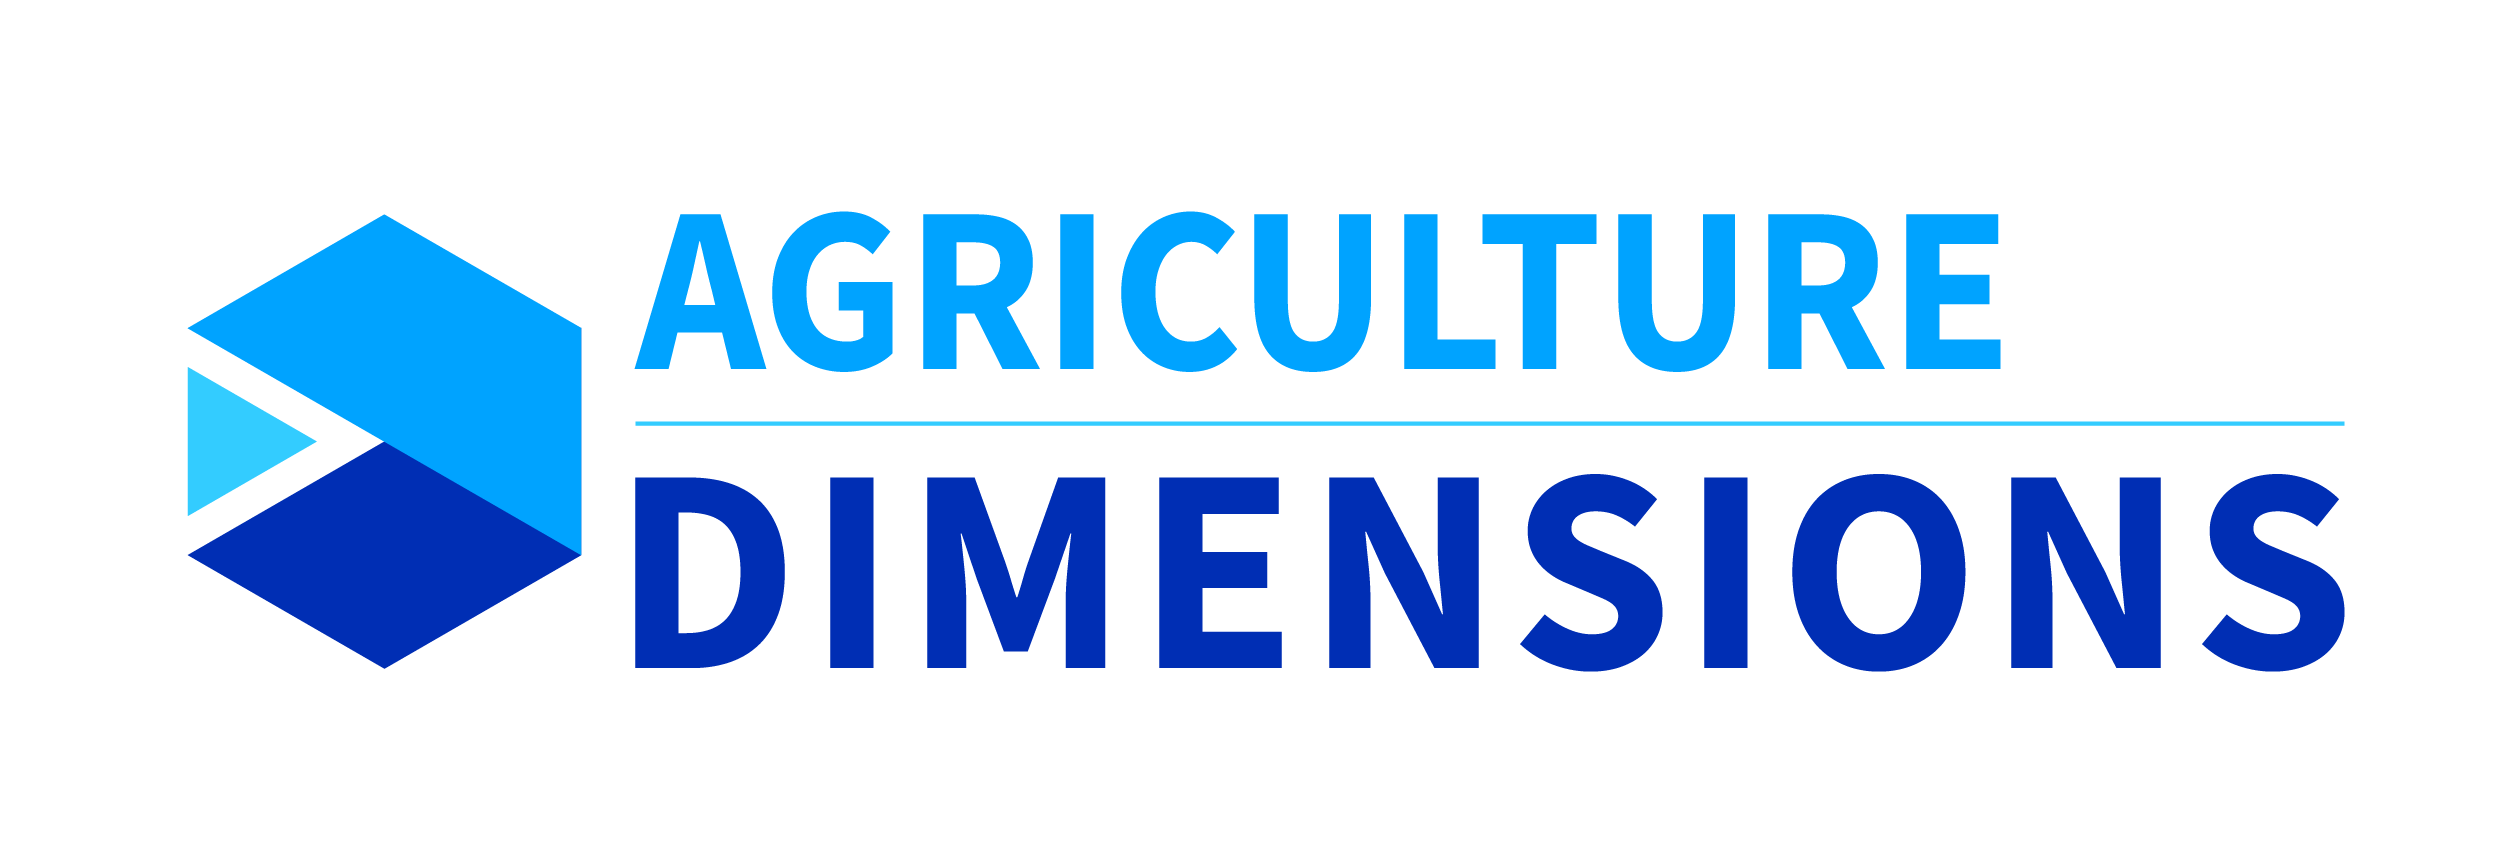 Acceltech Pte Ltd - Dimensiones de la agricultura